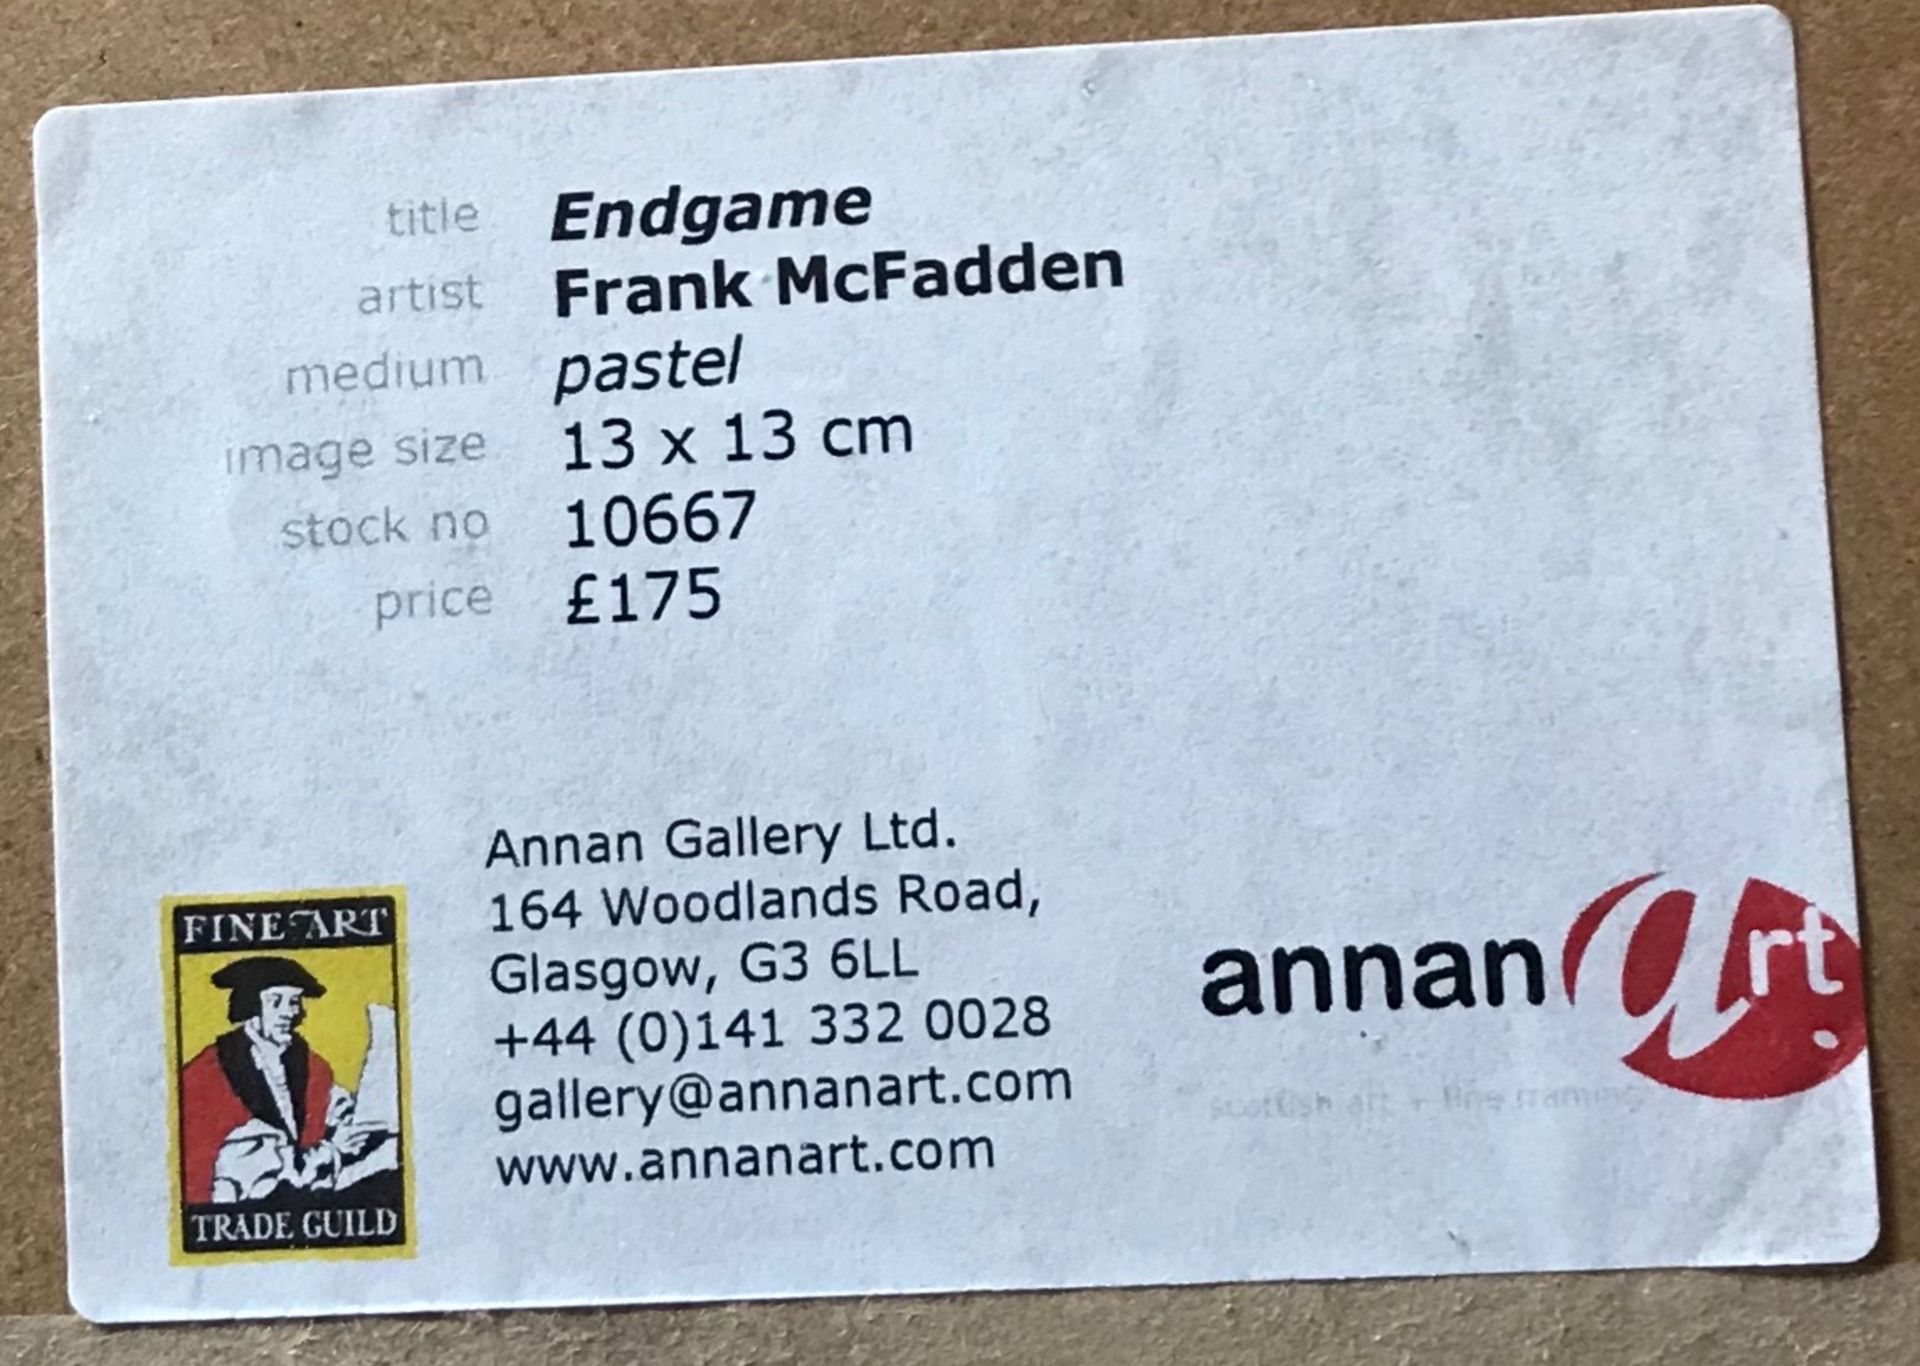 Frank McFadden (Contempoary Scottish artist) pastel "endgame" - Image 3 of 4